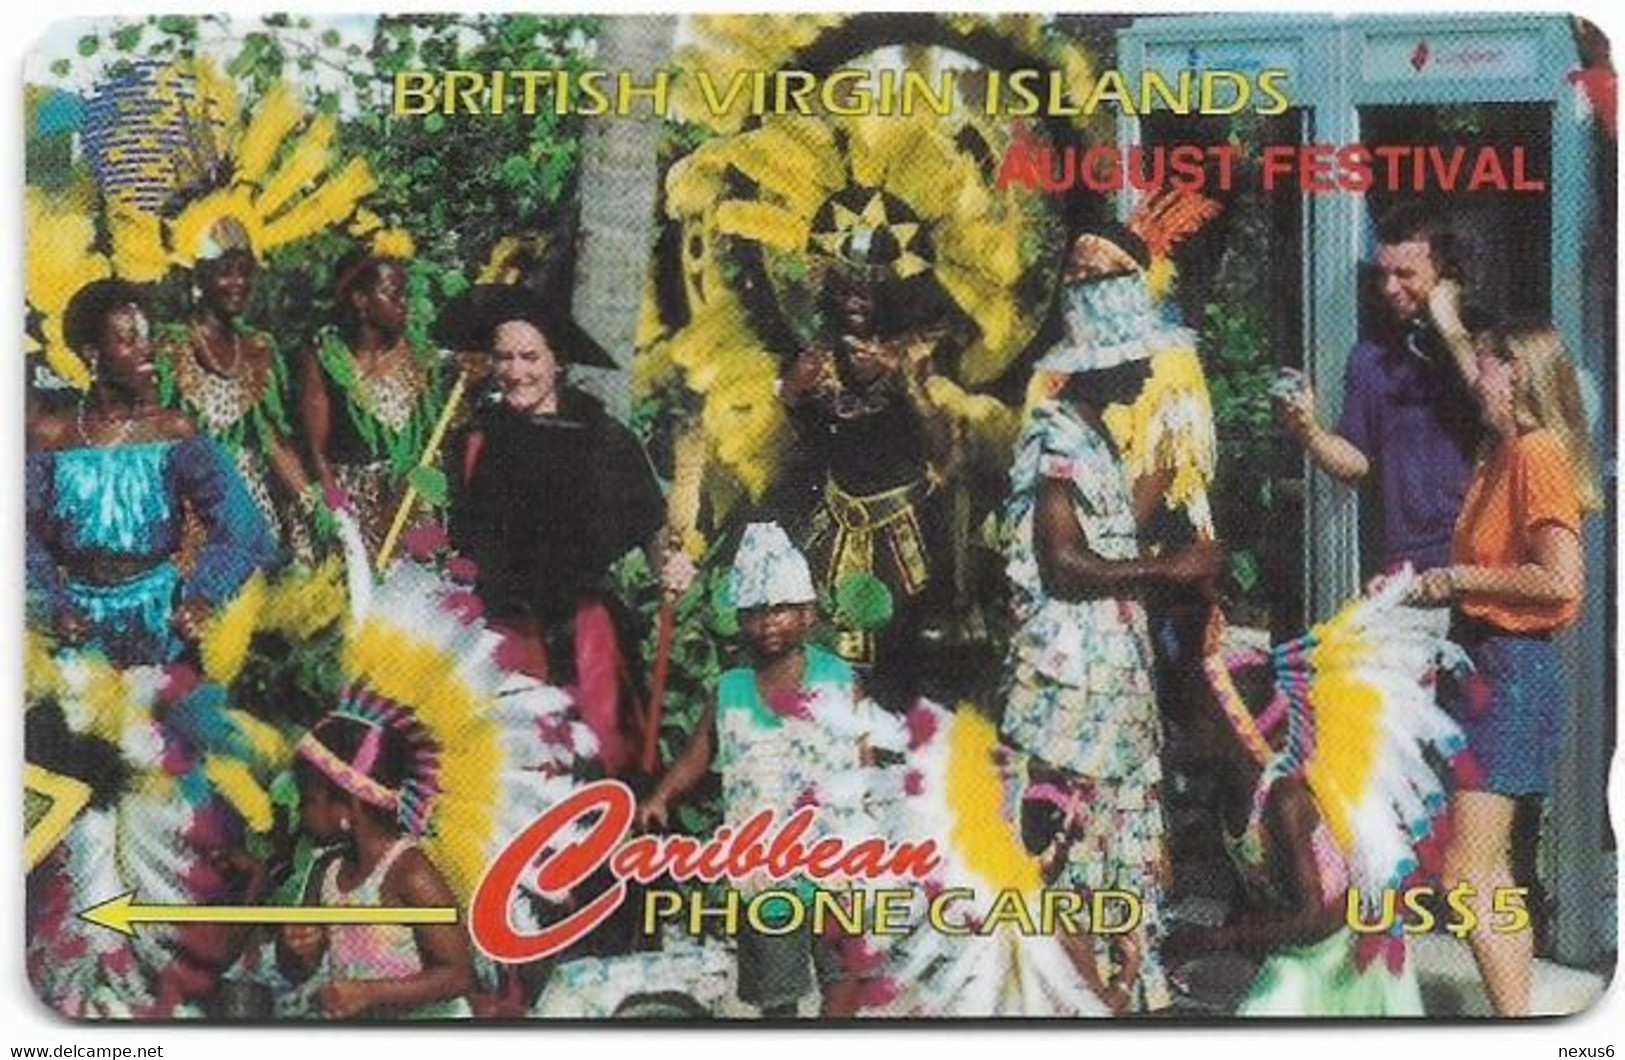 British Virgin Islands - C&W (GPT) - August Festival, 143CBVG, 1997, 10.000ex, Used - Virgin Islands